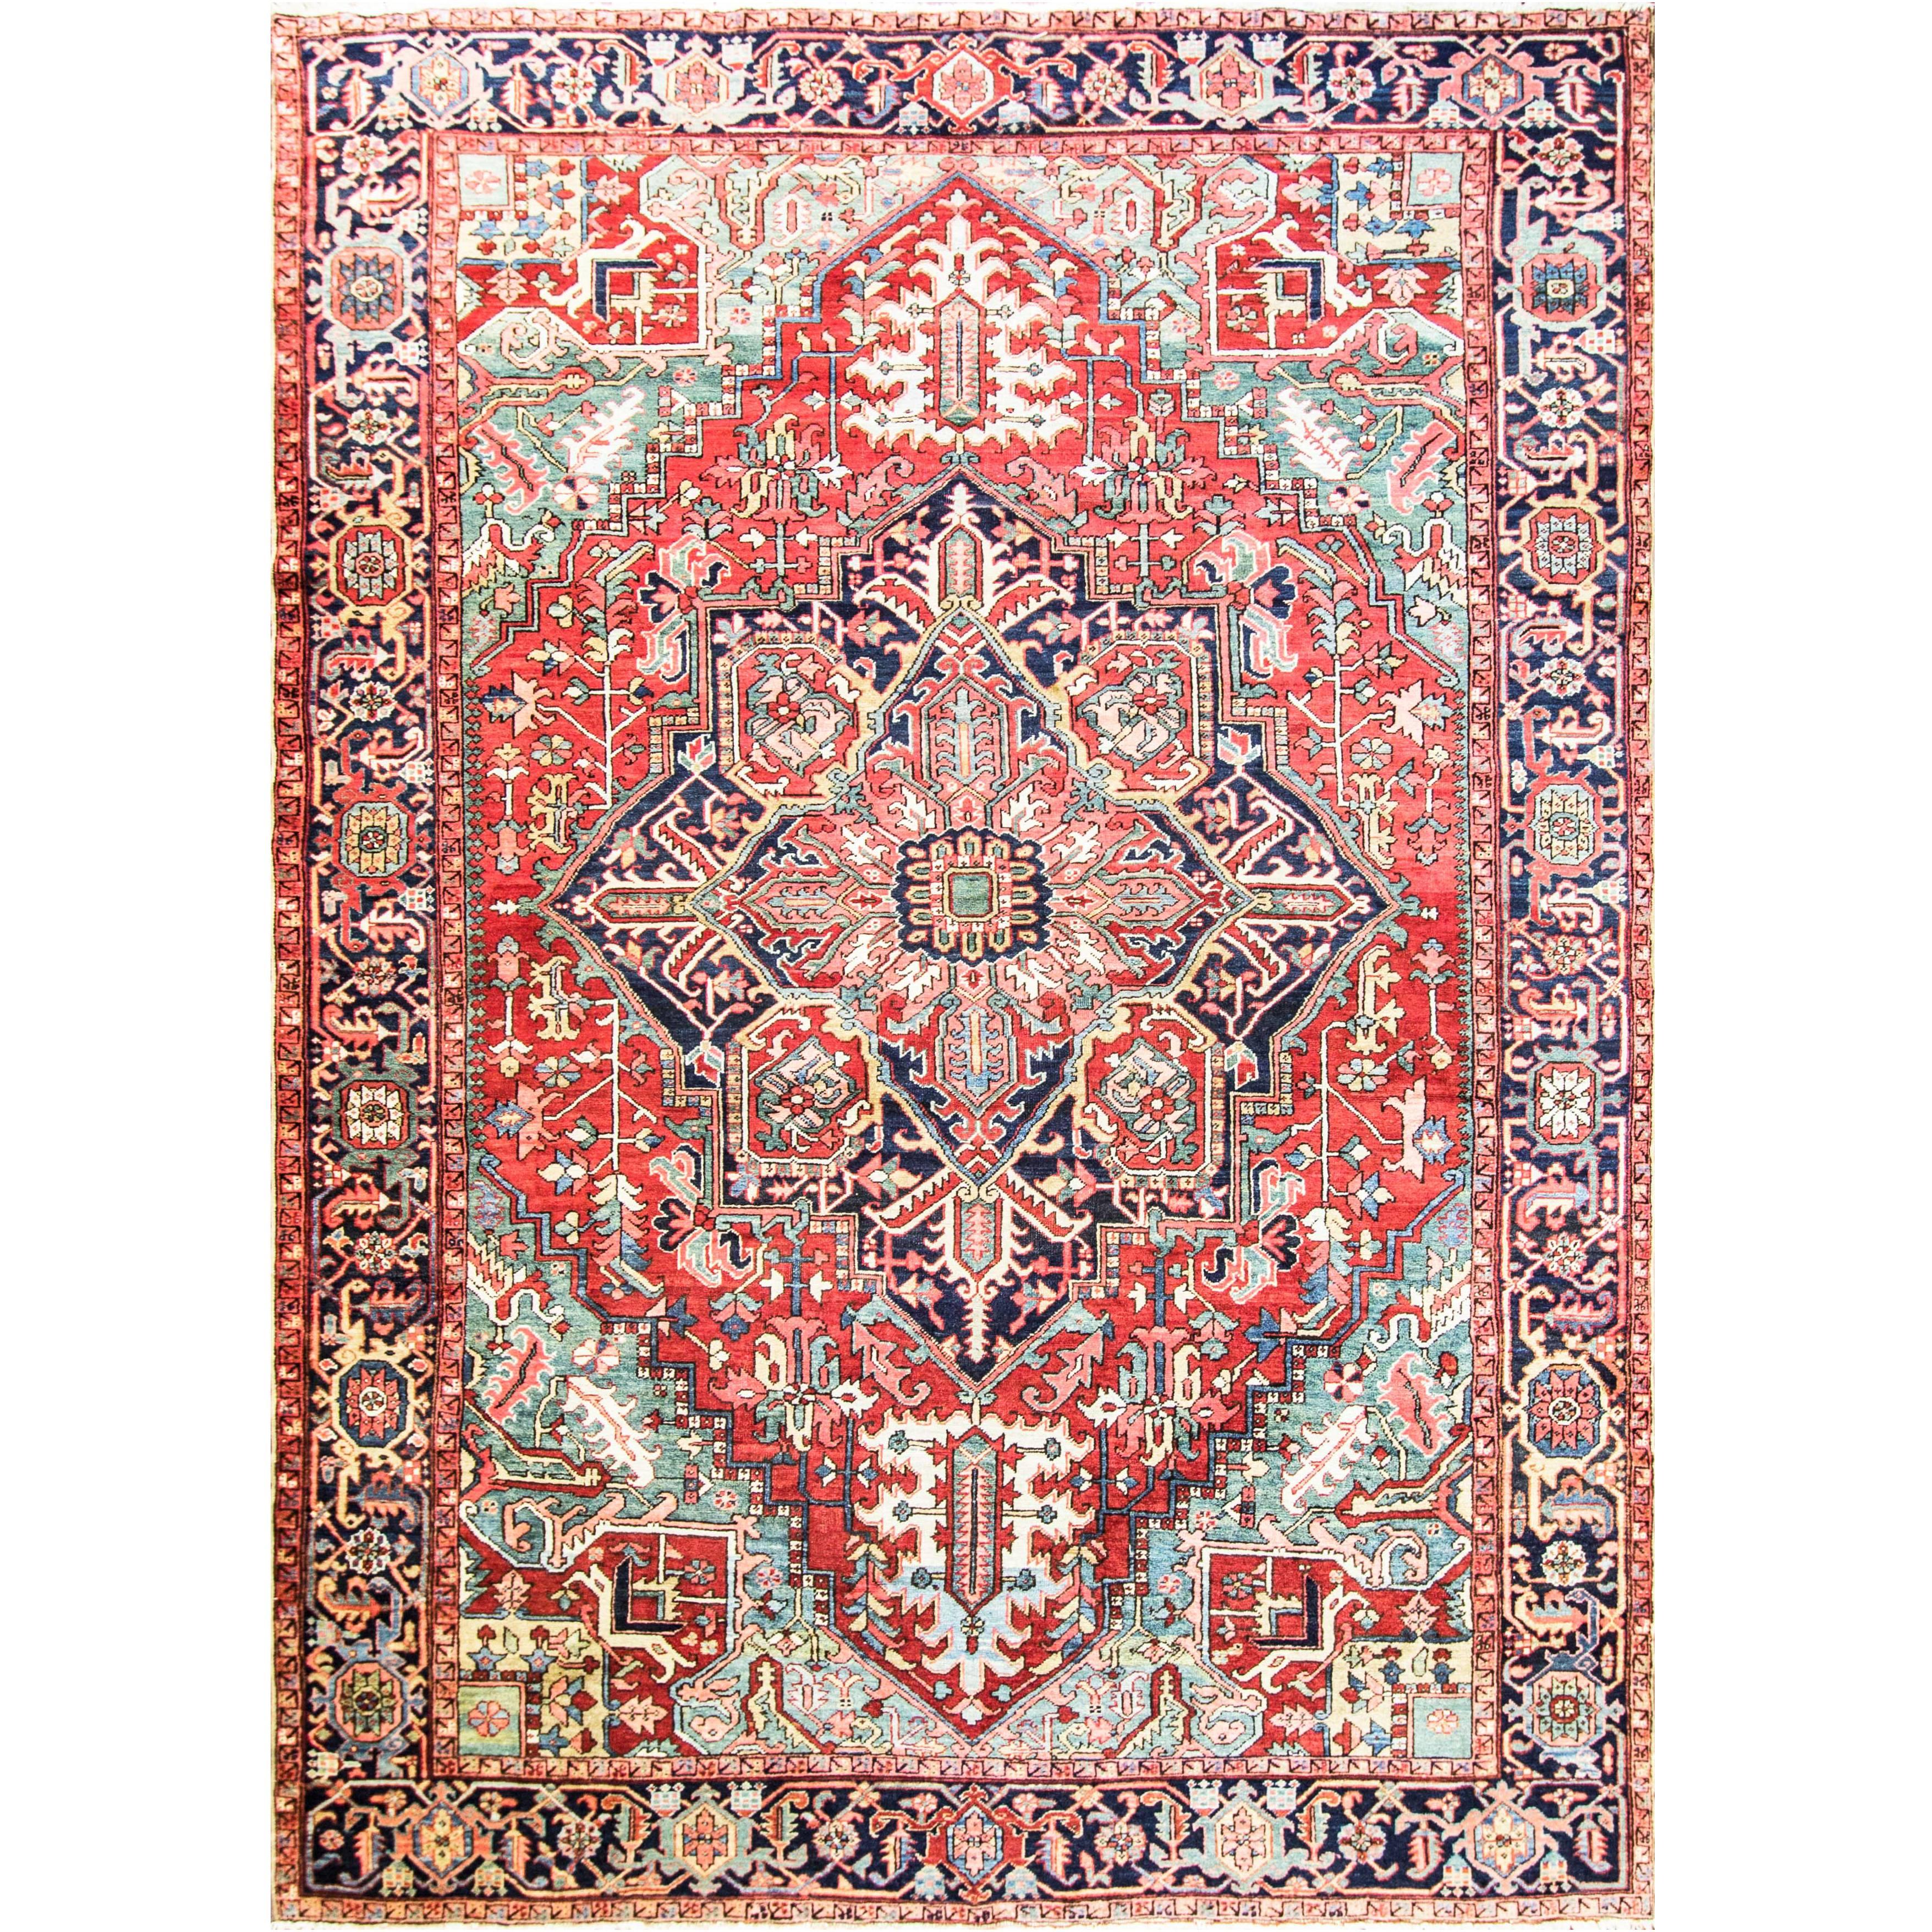  Antique Persian Heriz/Serapi Carpet, Charming, 9' x 12'7"